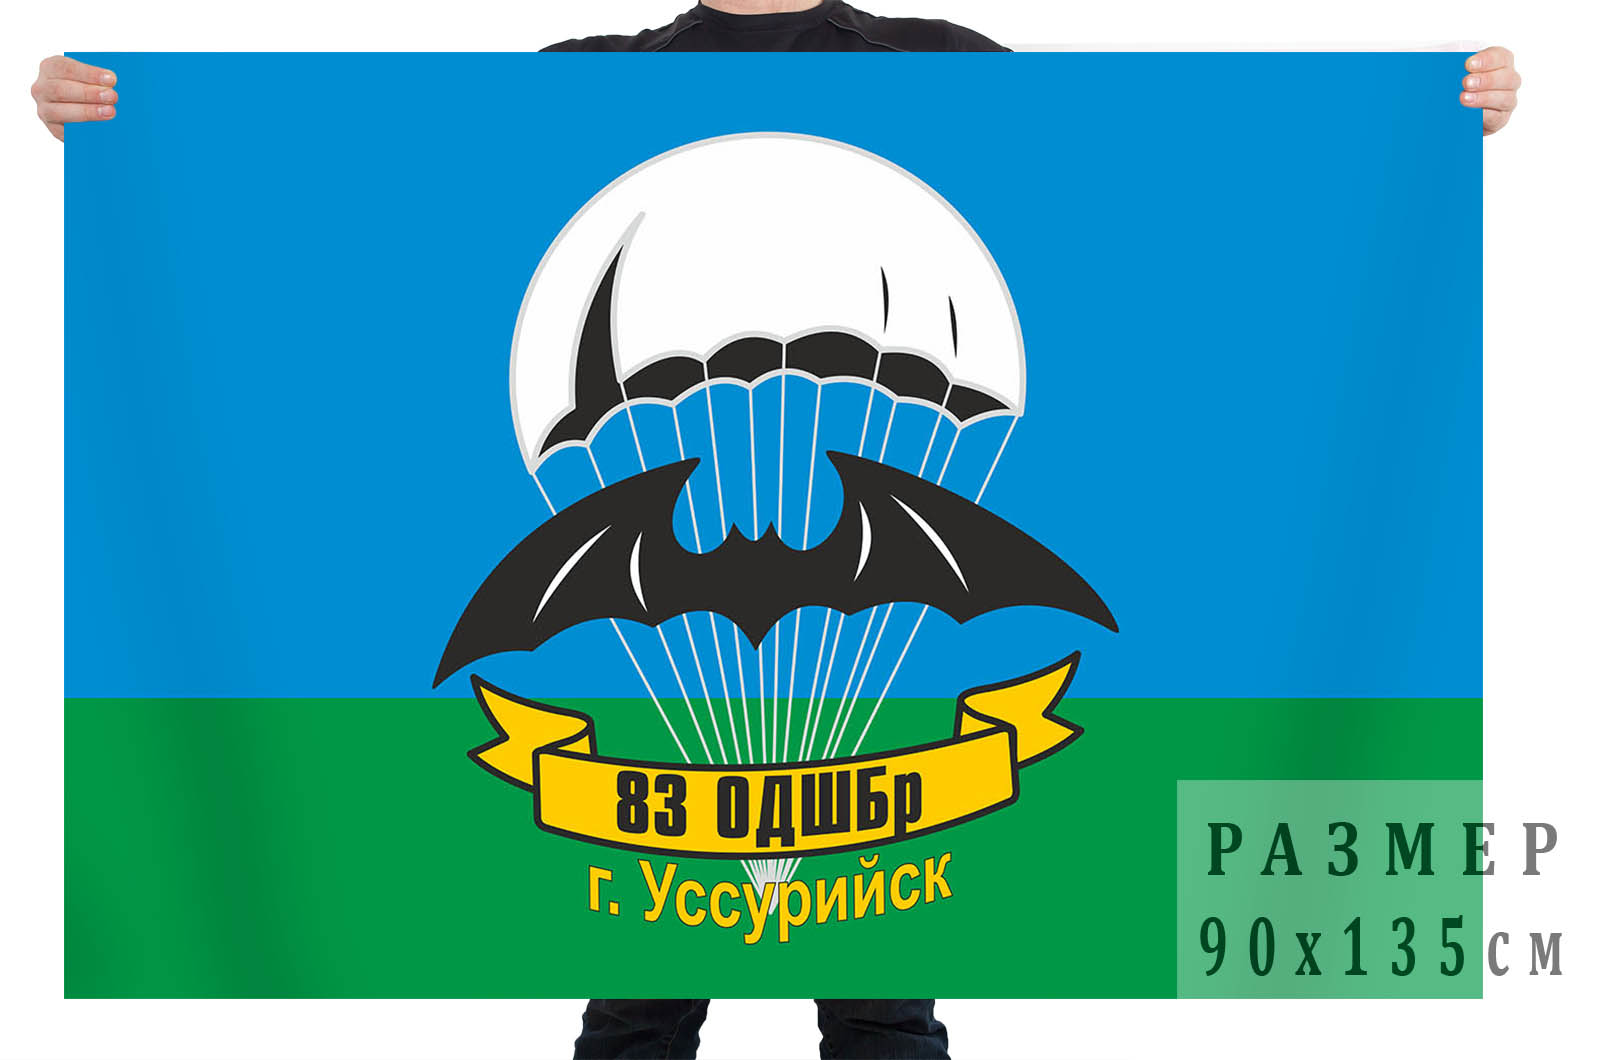 Флаг 83-я ОДШБр, Уссурийск